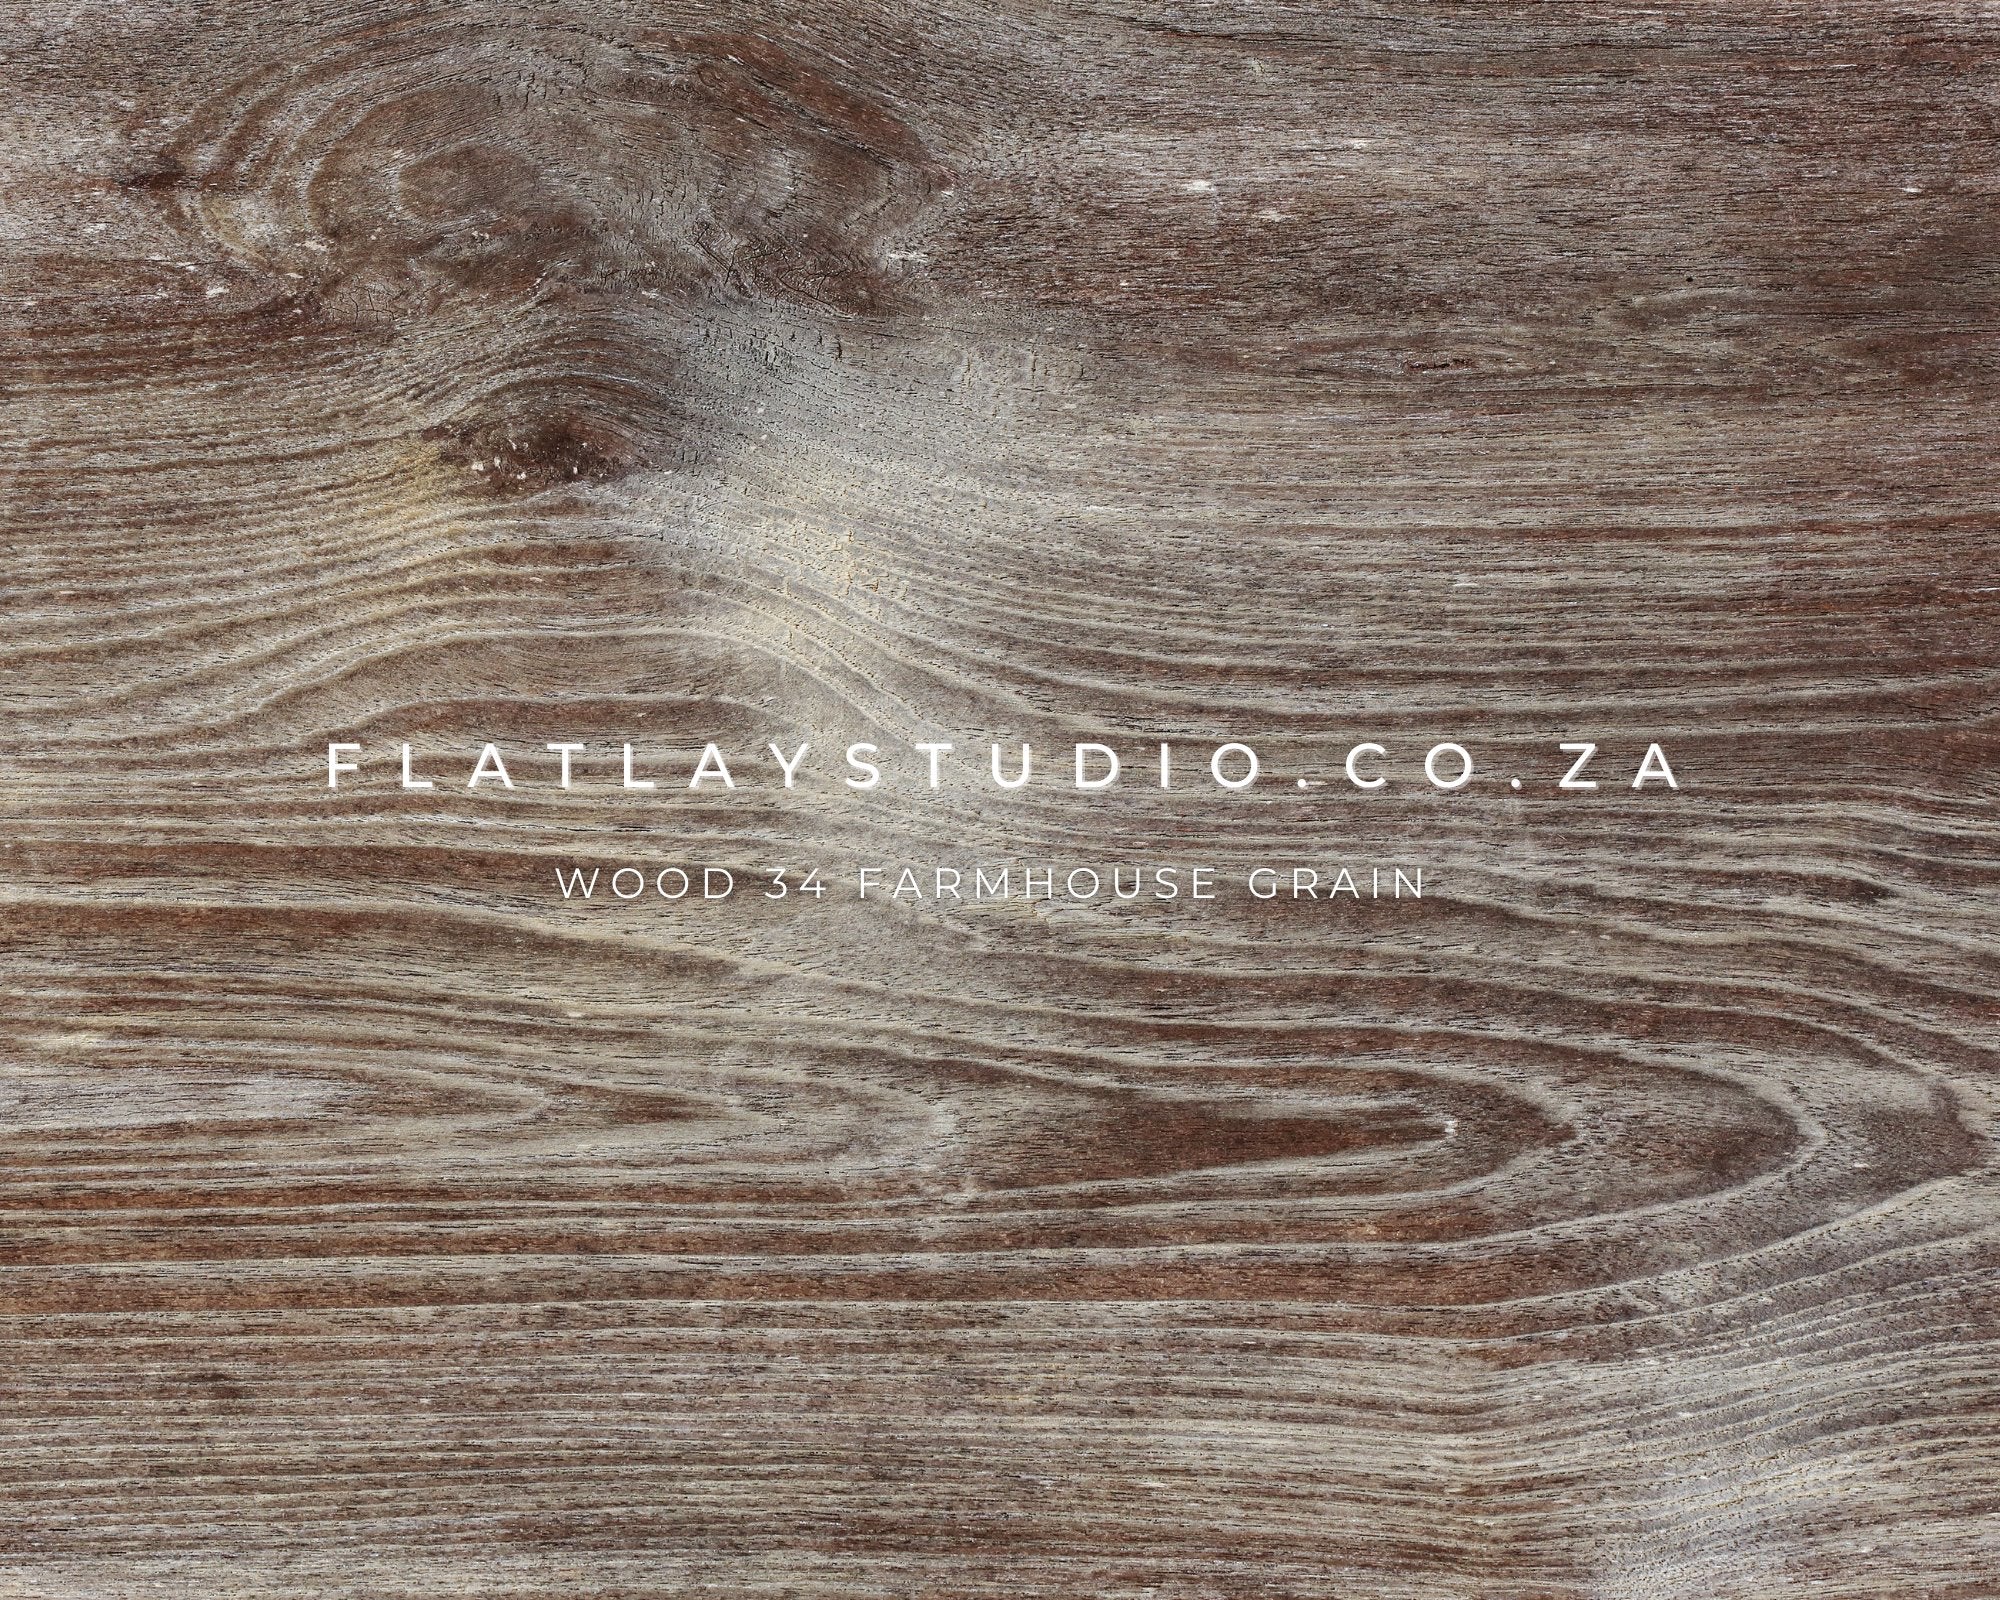 Wood 34 Farmhouse Grain - FlatlayStudio Flatlay Styling Board